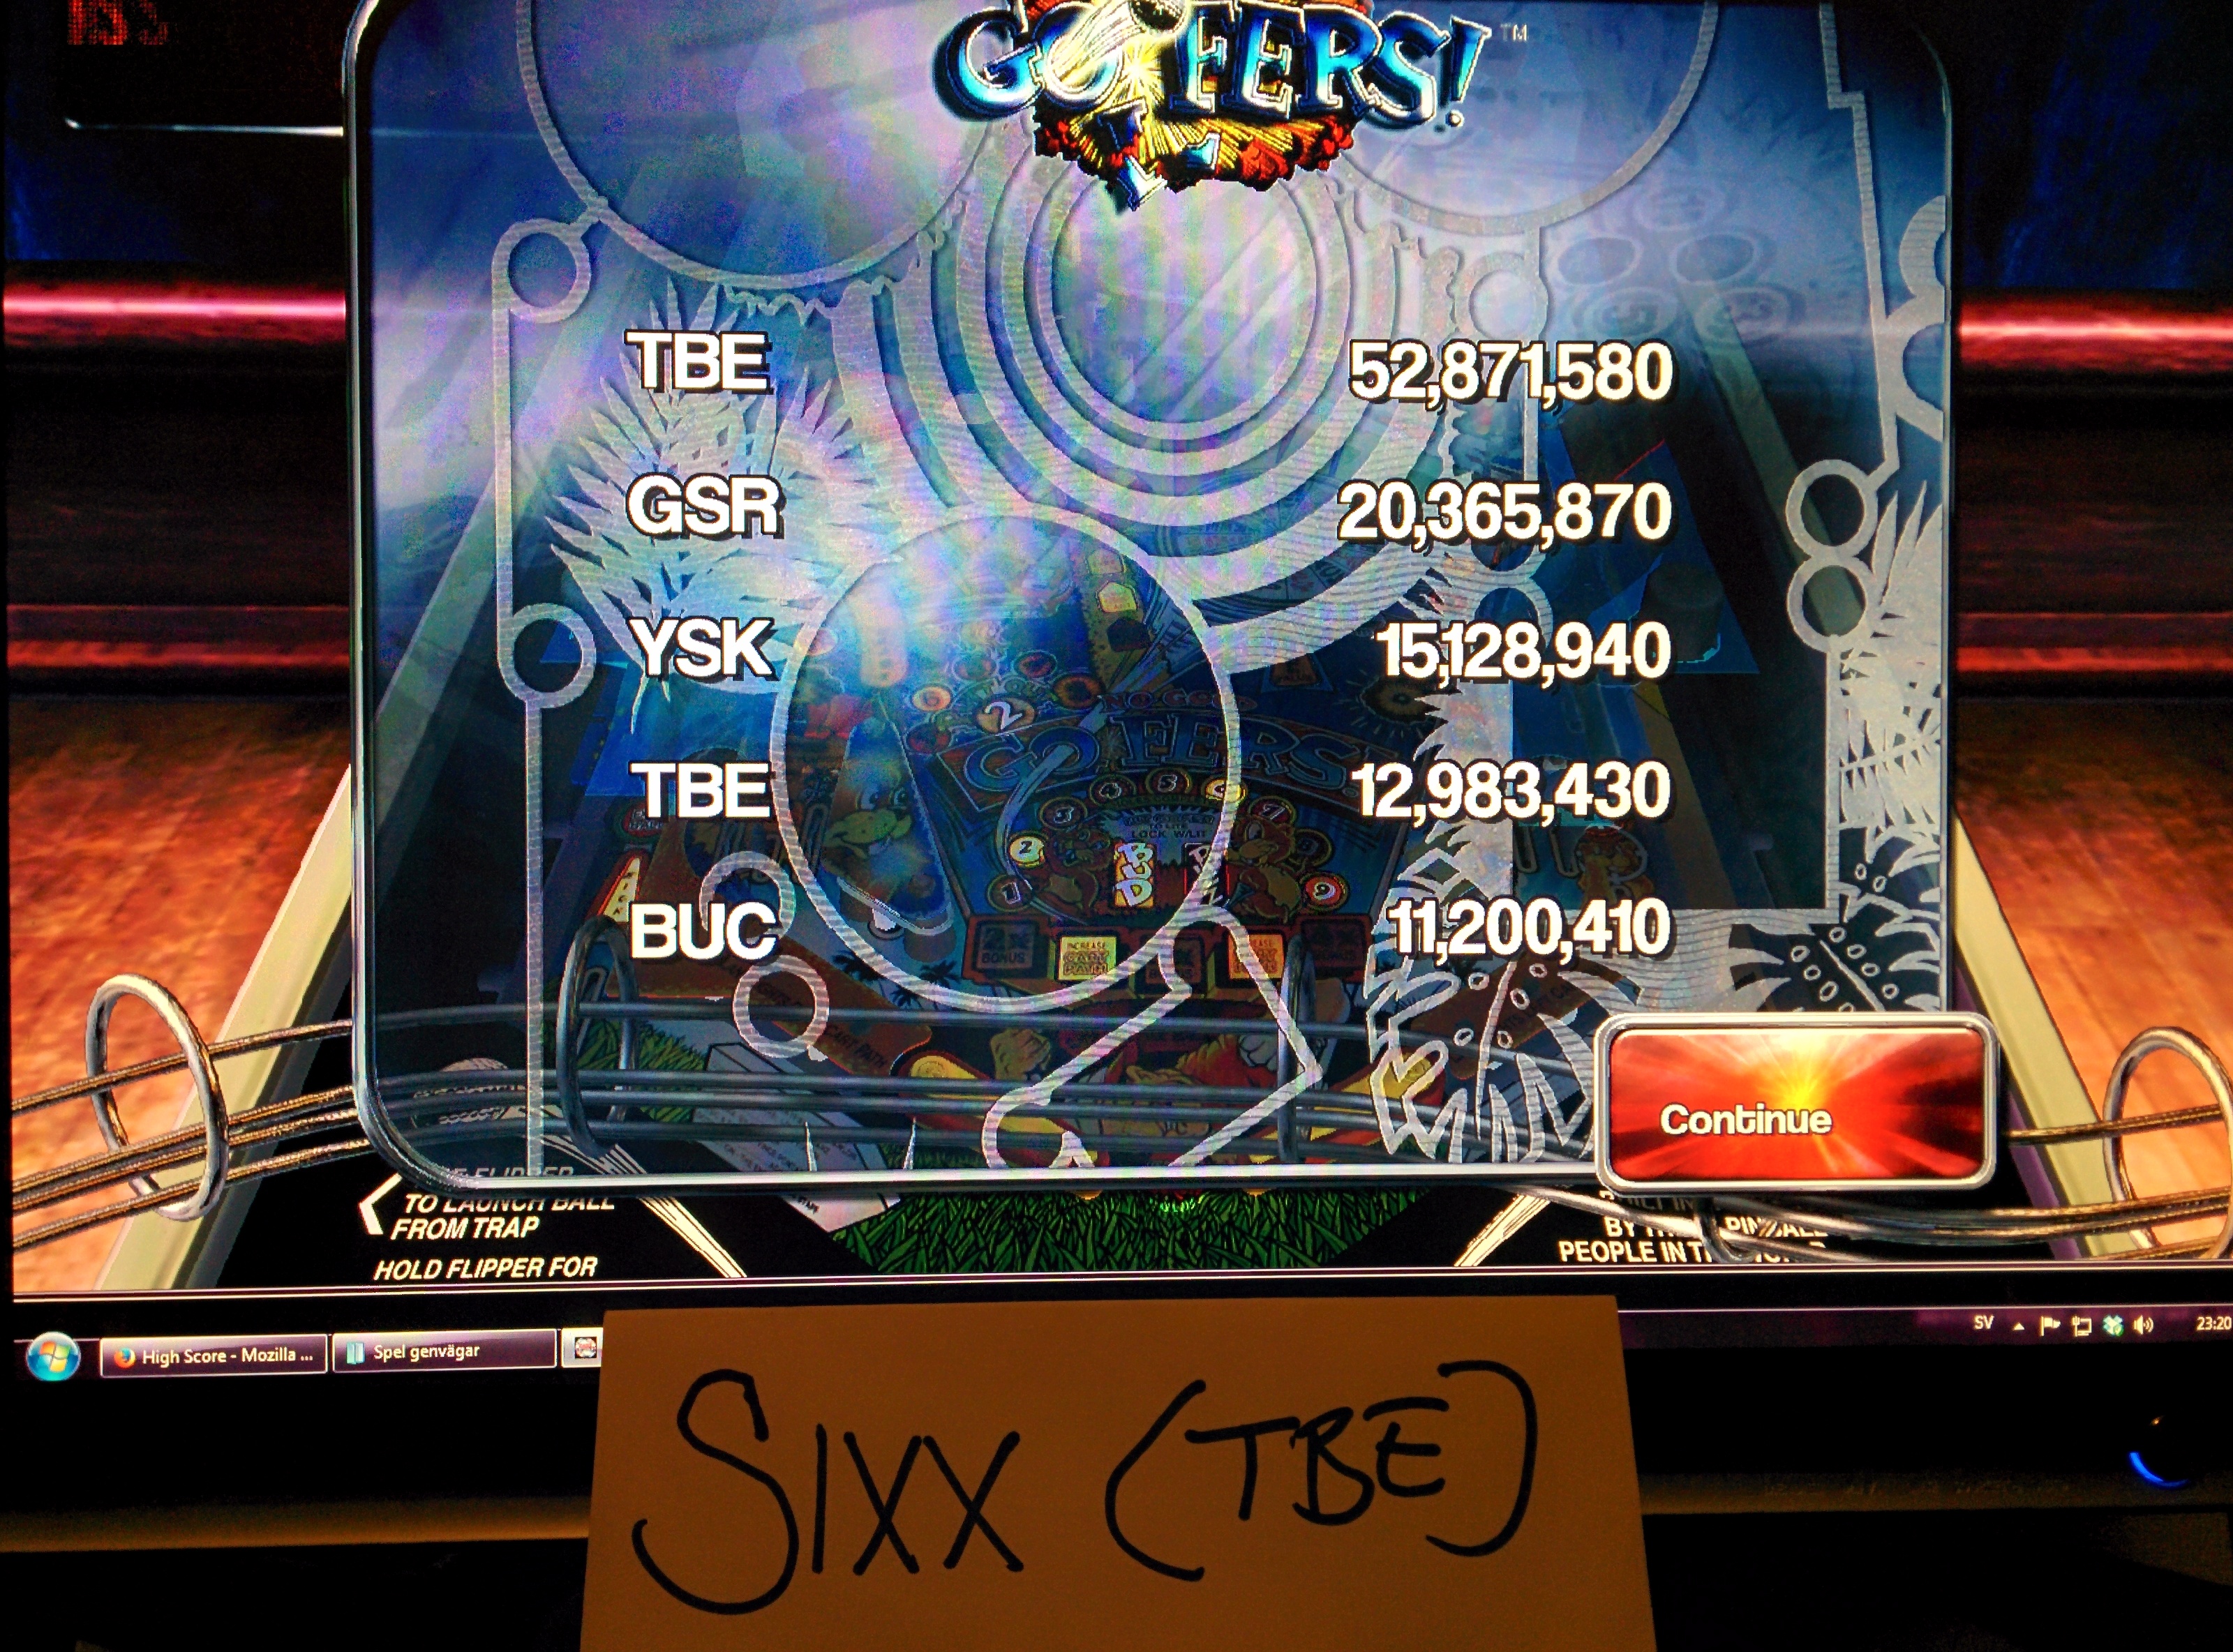 Sixx: Pinball Arcade: No Good Goofers (PC) 52,871,580 points on 2014-05-11 14:09:19